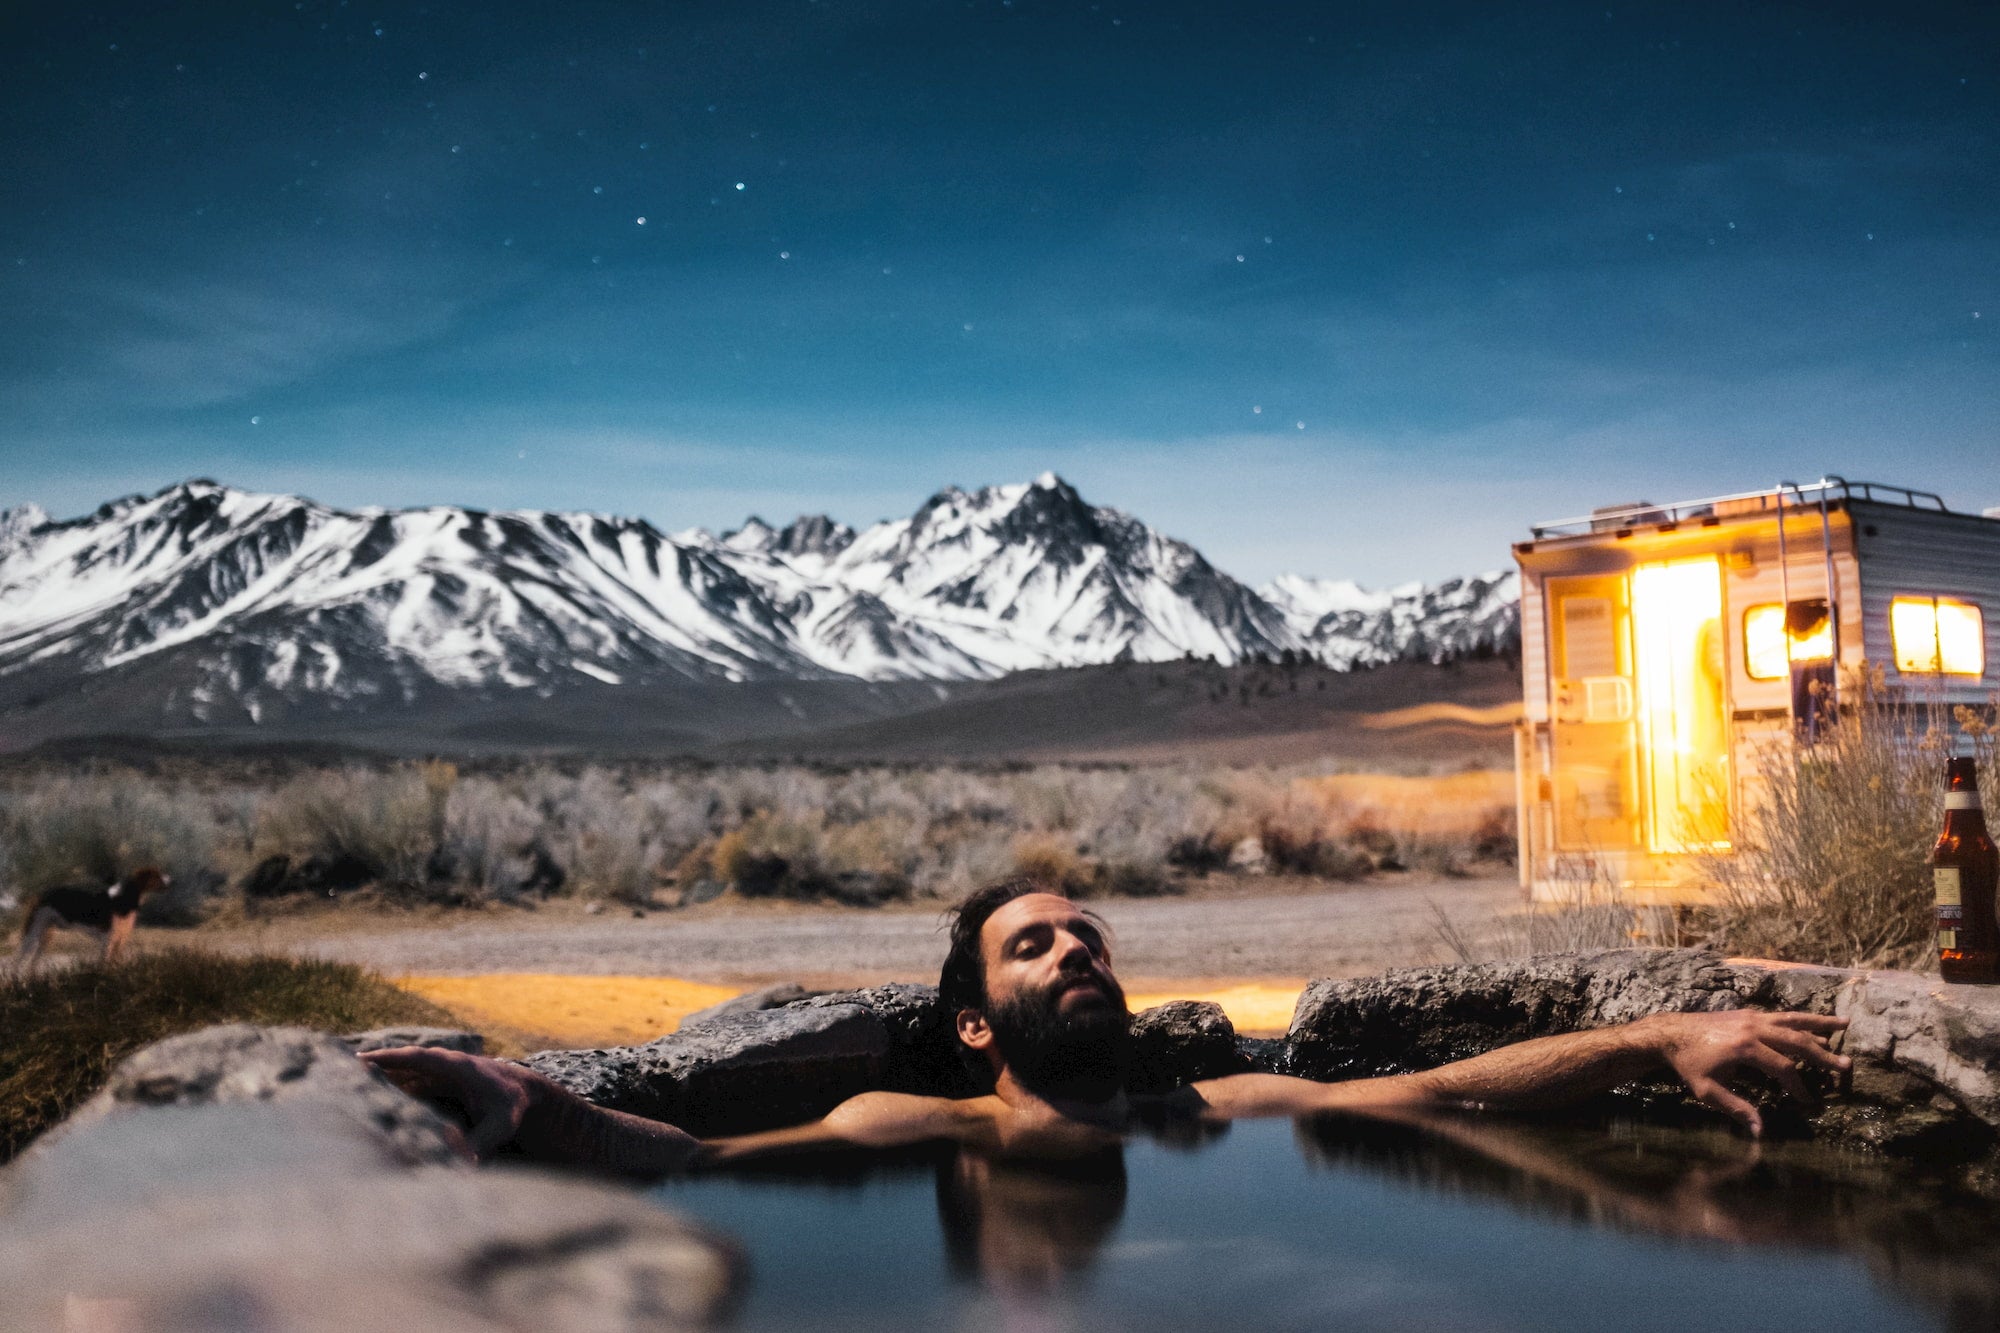 Bearded man lounging in hot springs beside camper in a mountain landscape.